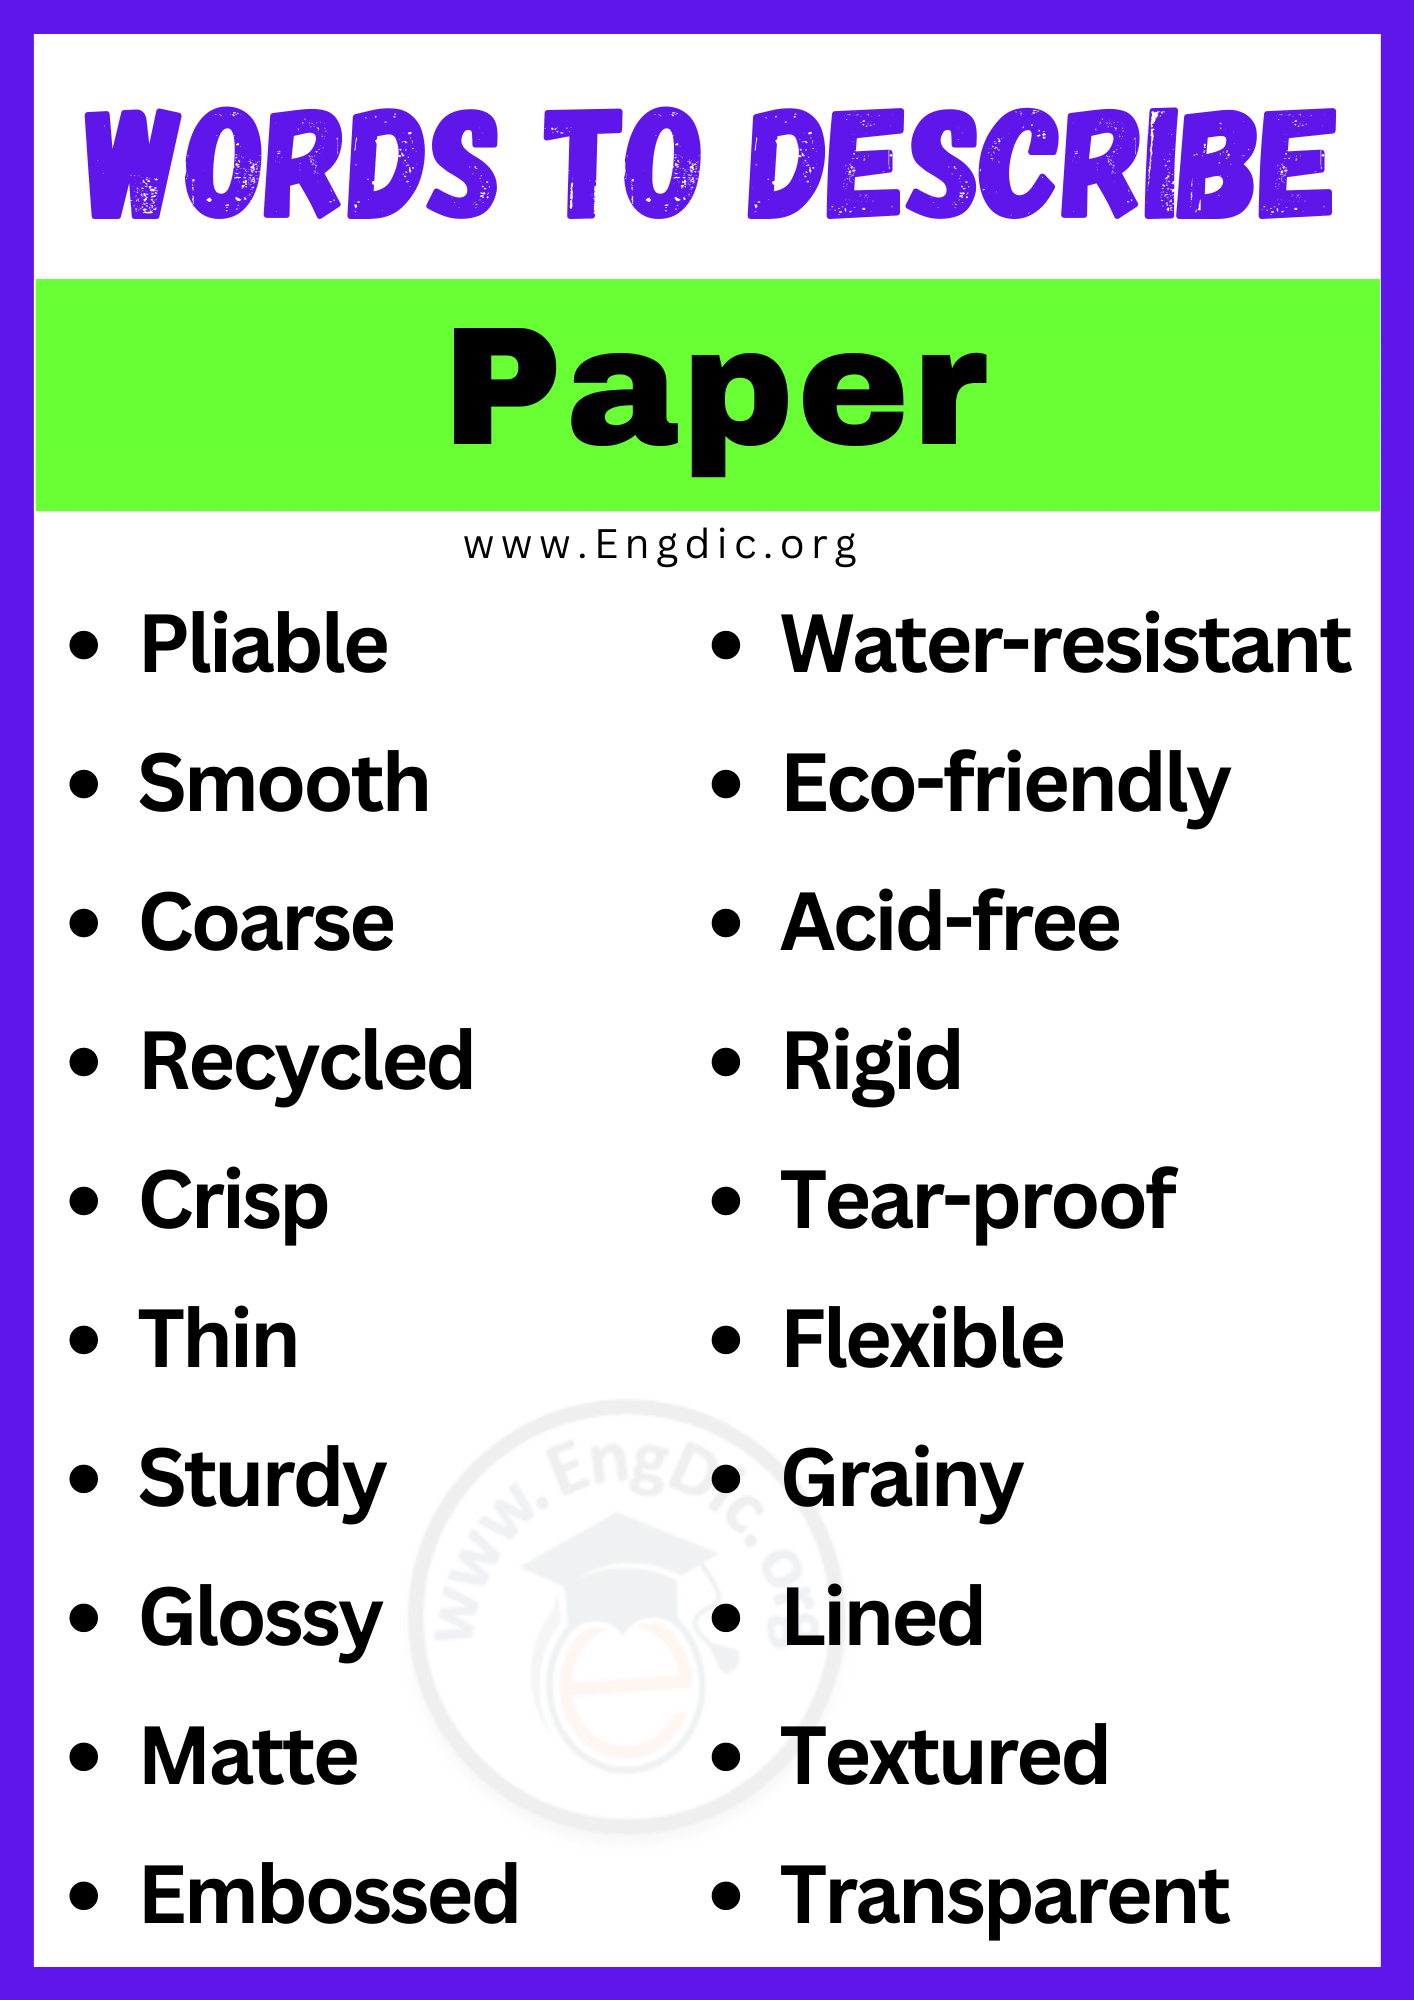 Words to Describe Paper